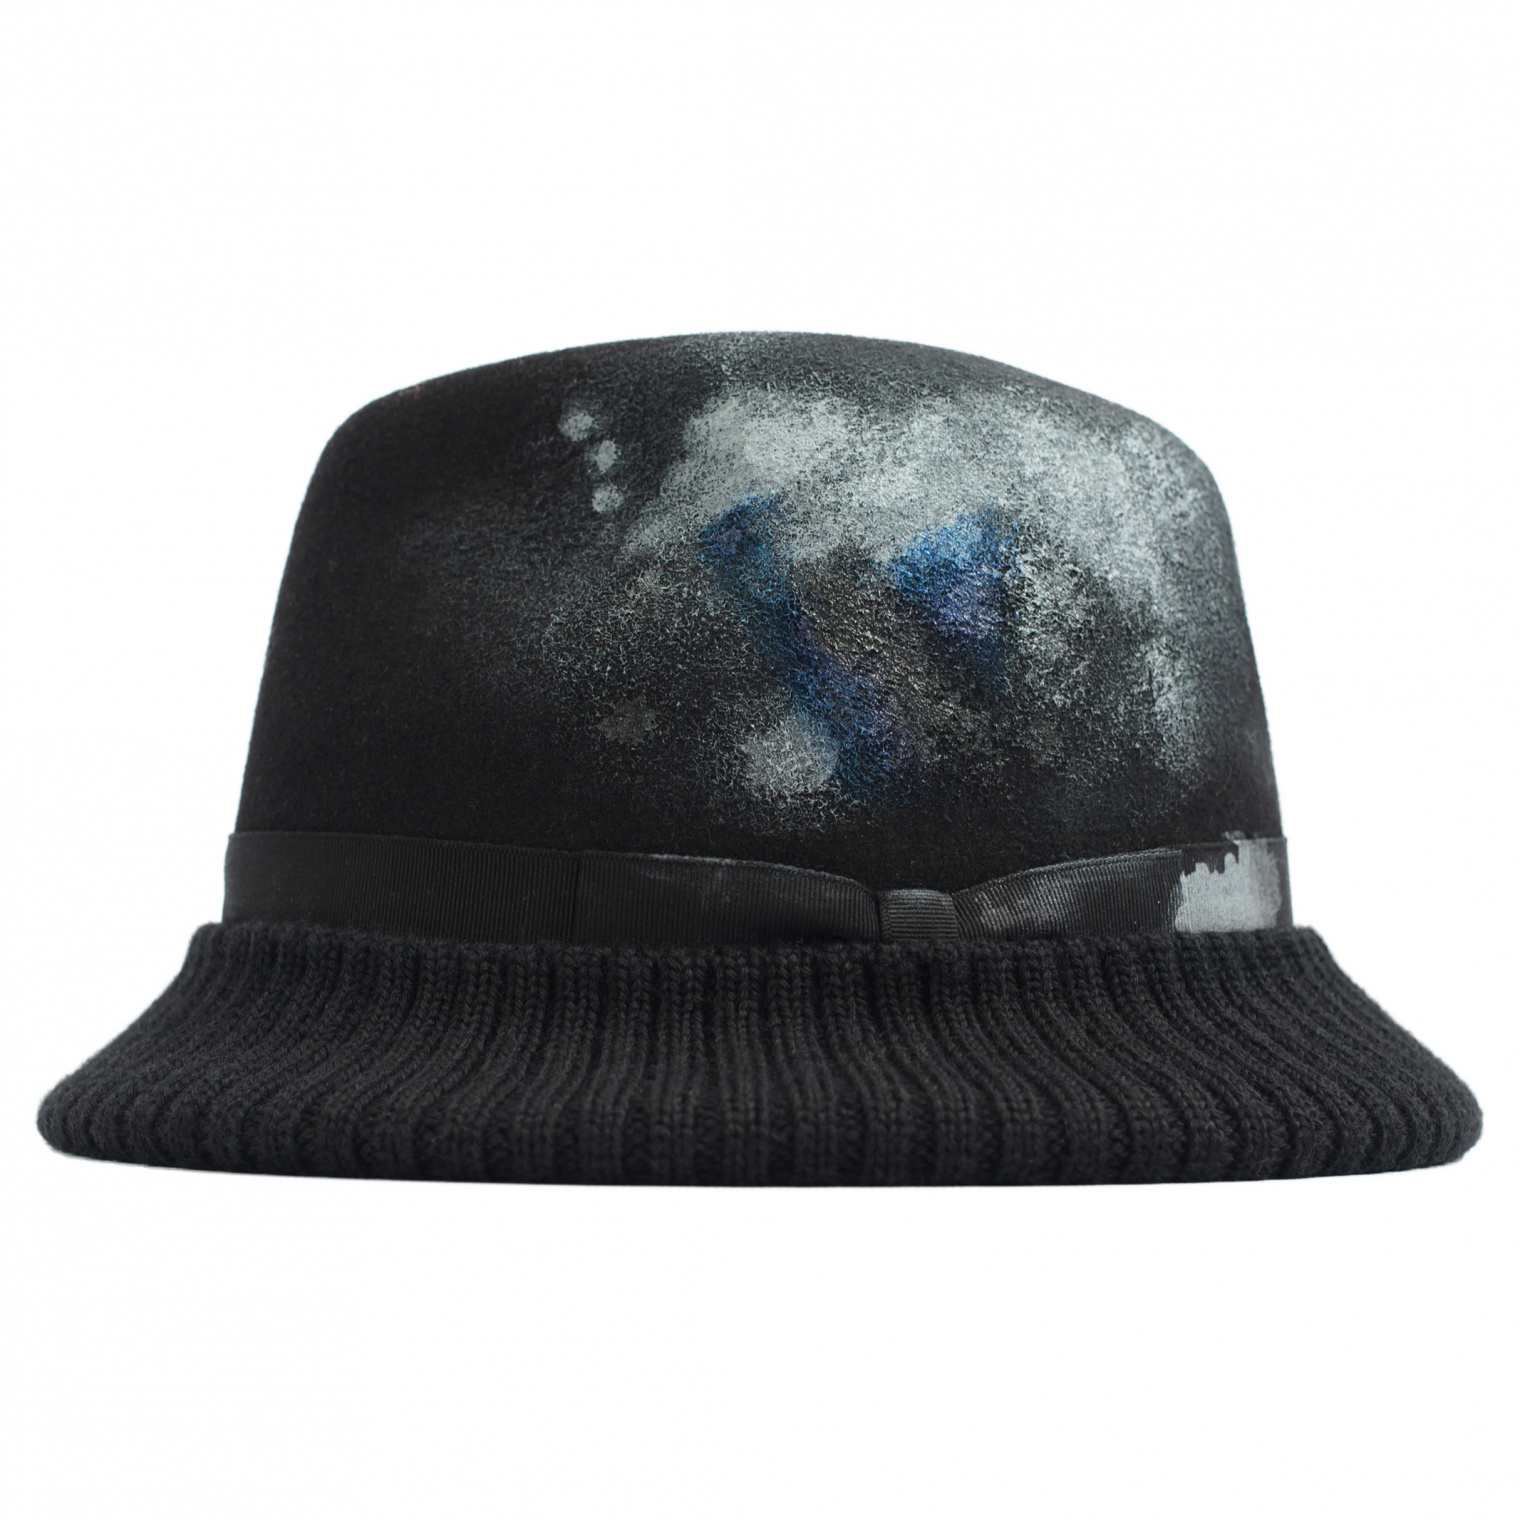 Yohji Yamamoto Black Hat With Paint Marks